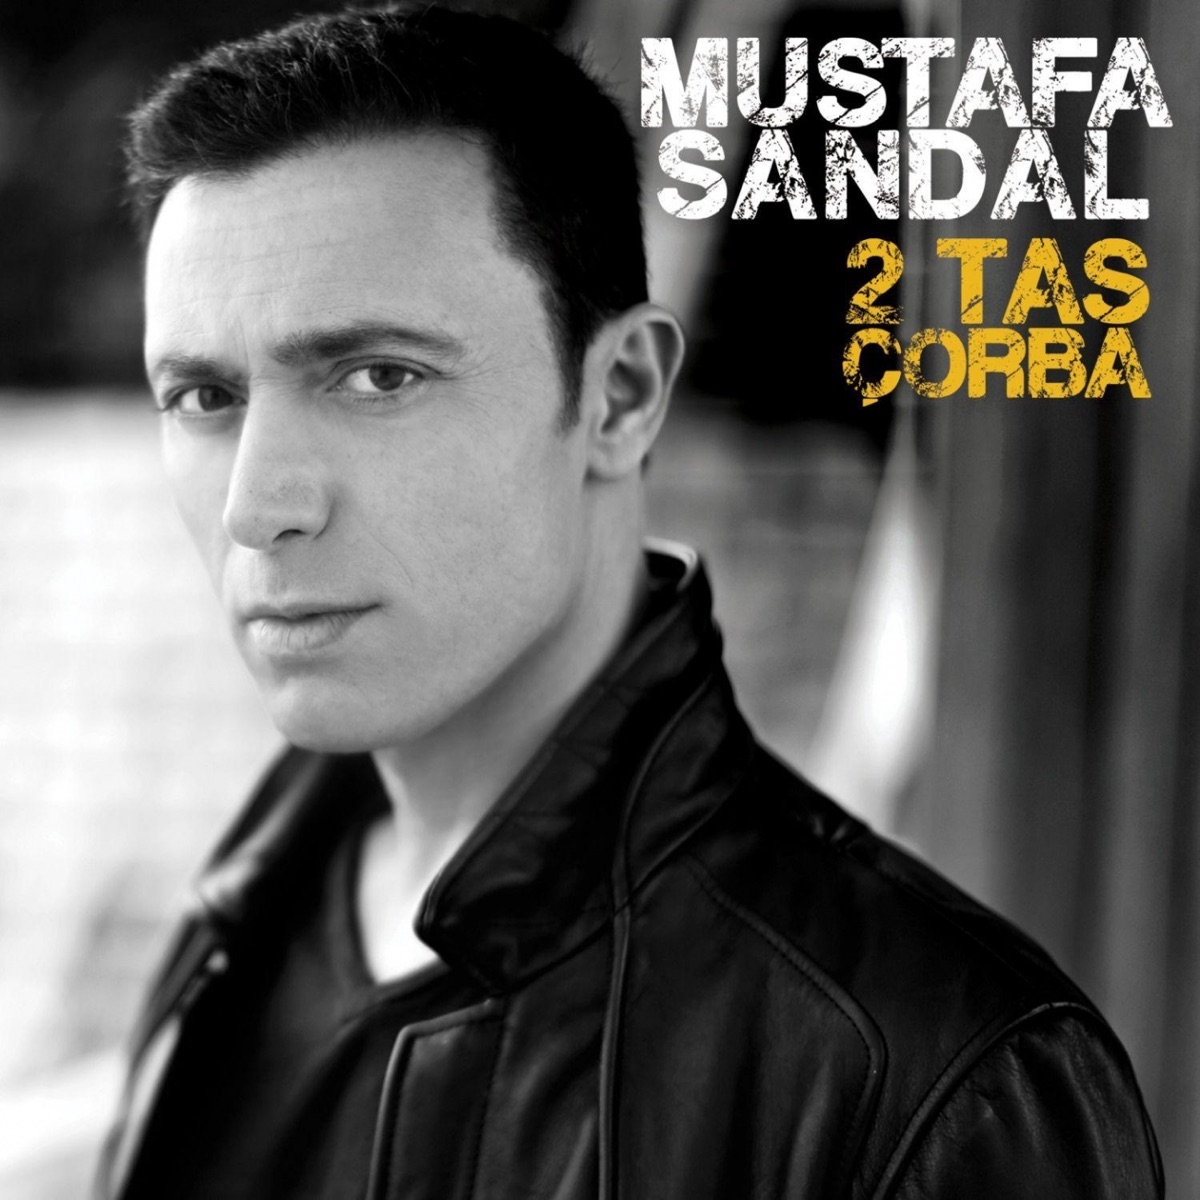 Ben Olsaydım - Single by Mustafa Sandal on Apple Music